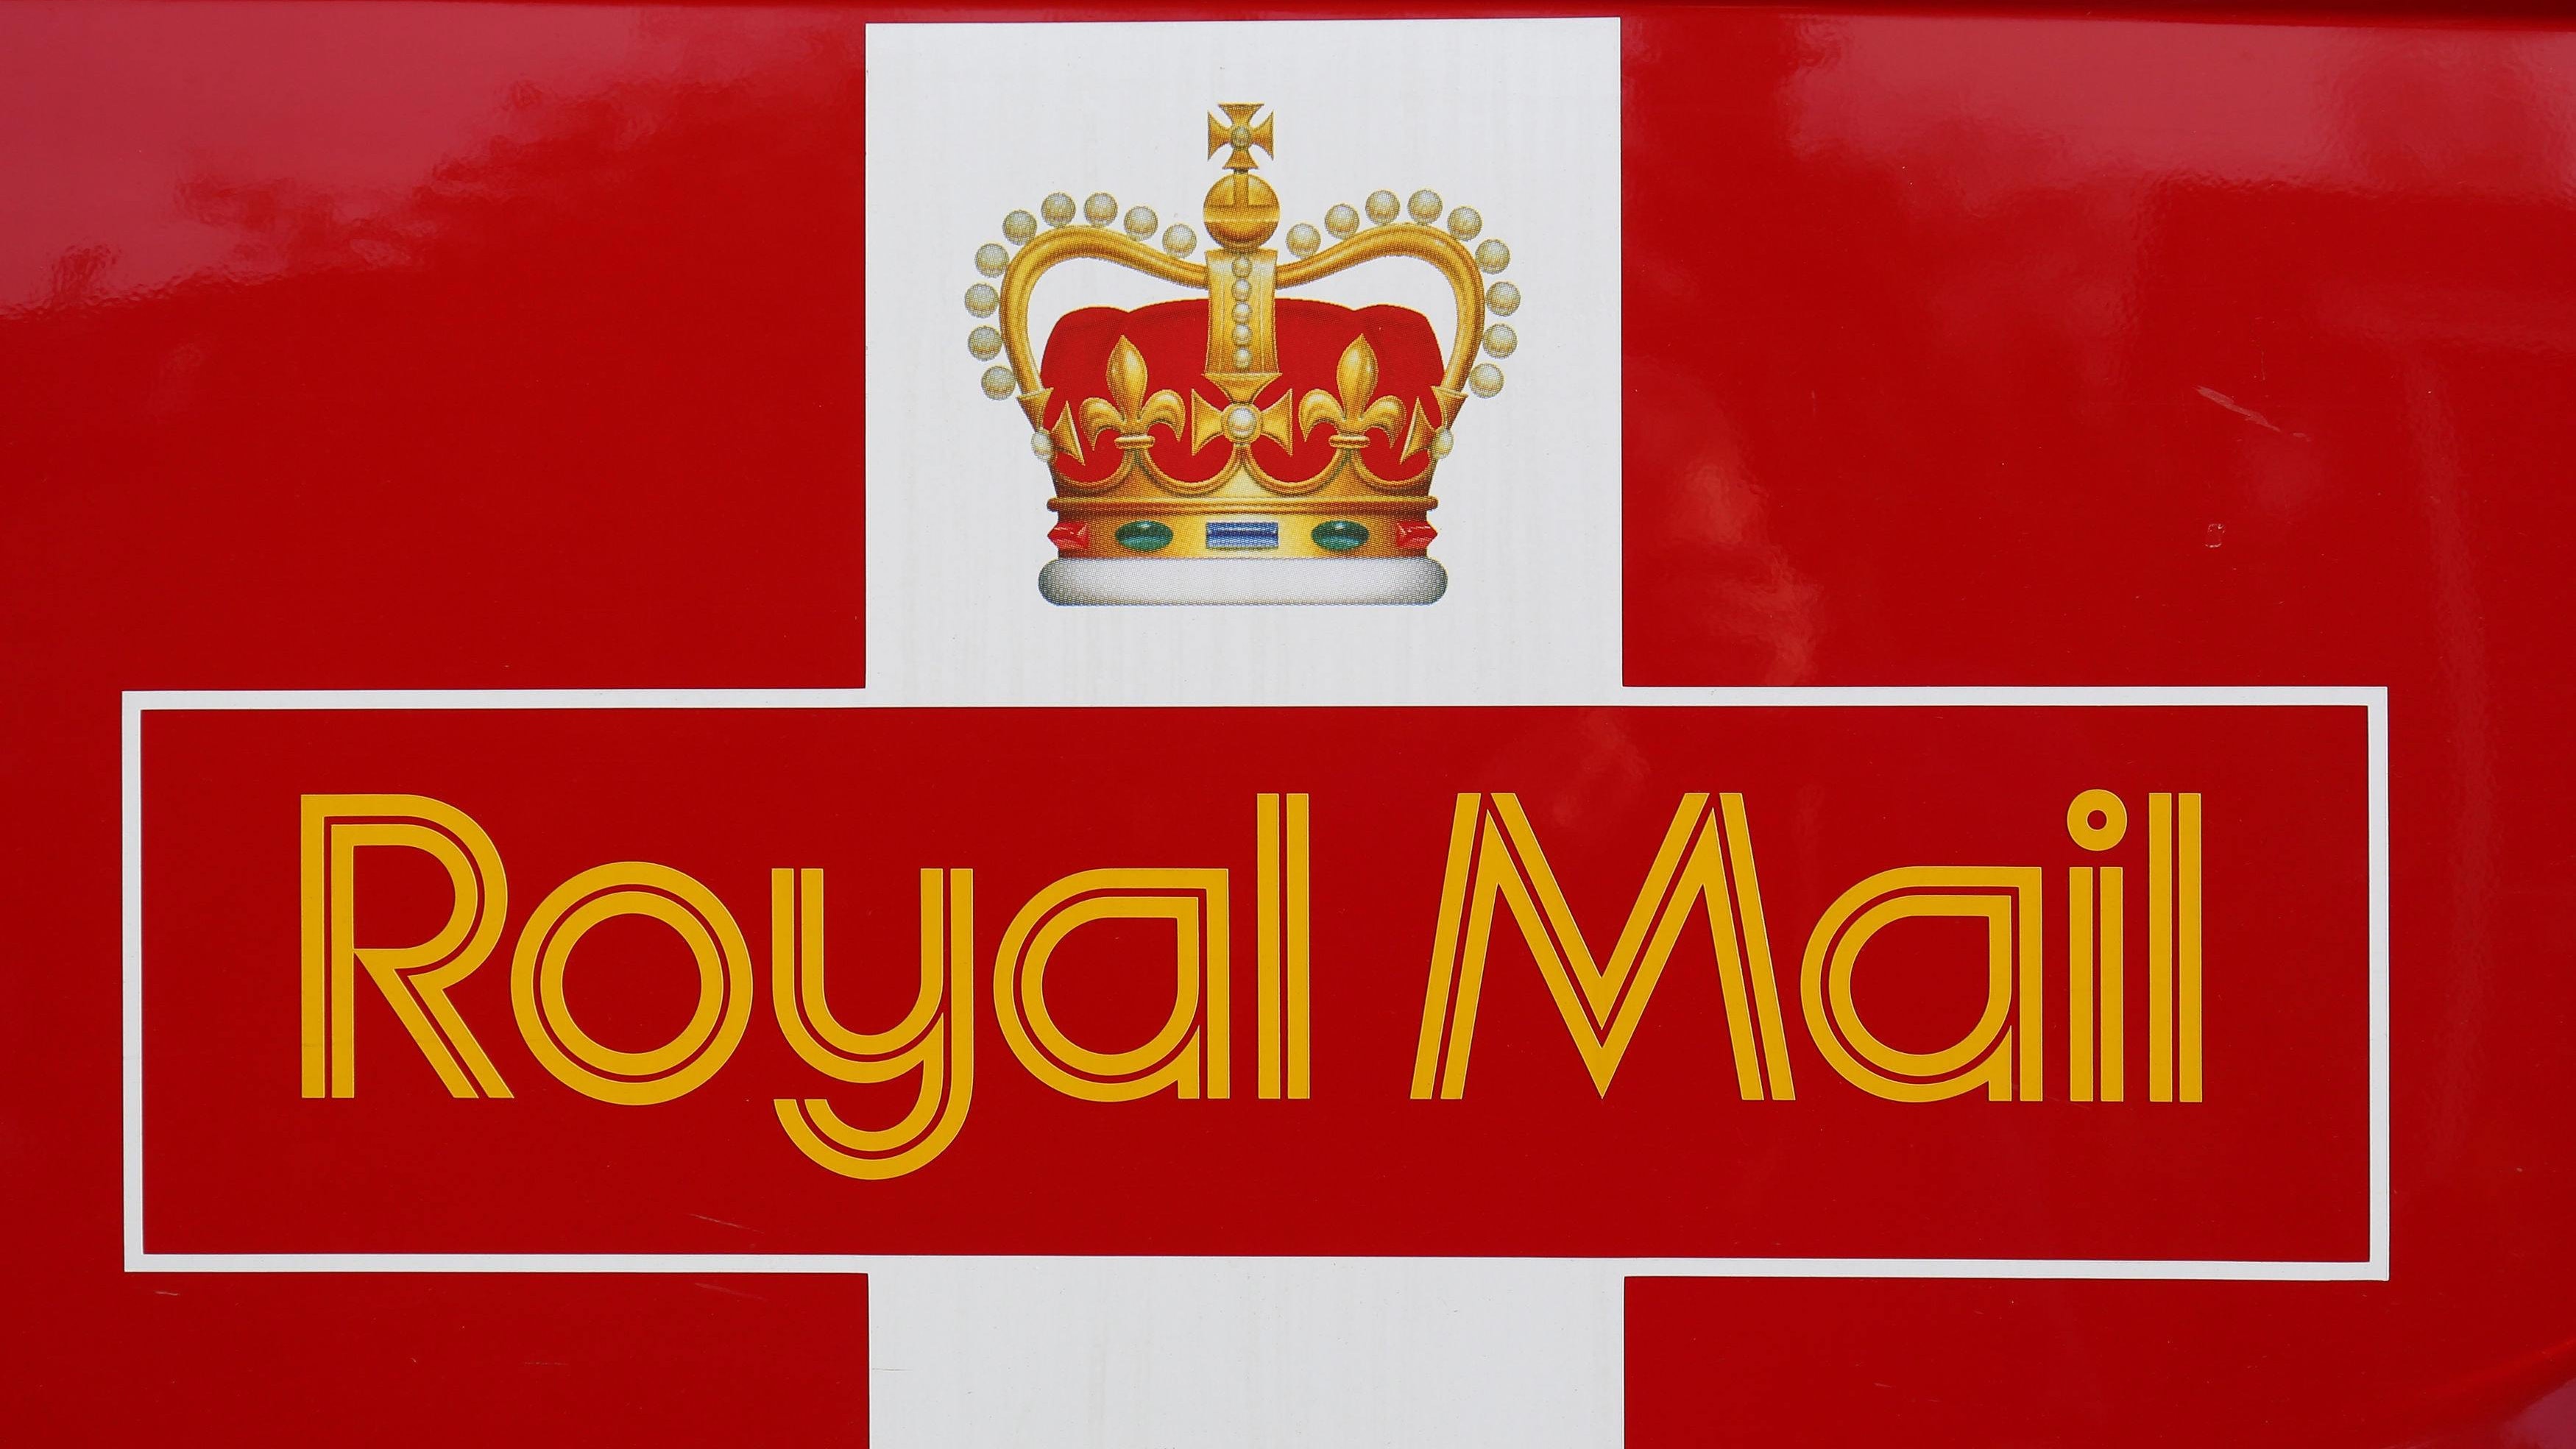 445 Royal Mail Christmas jobs up for grabs nijobfinder.co.uk